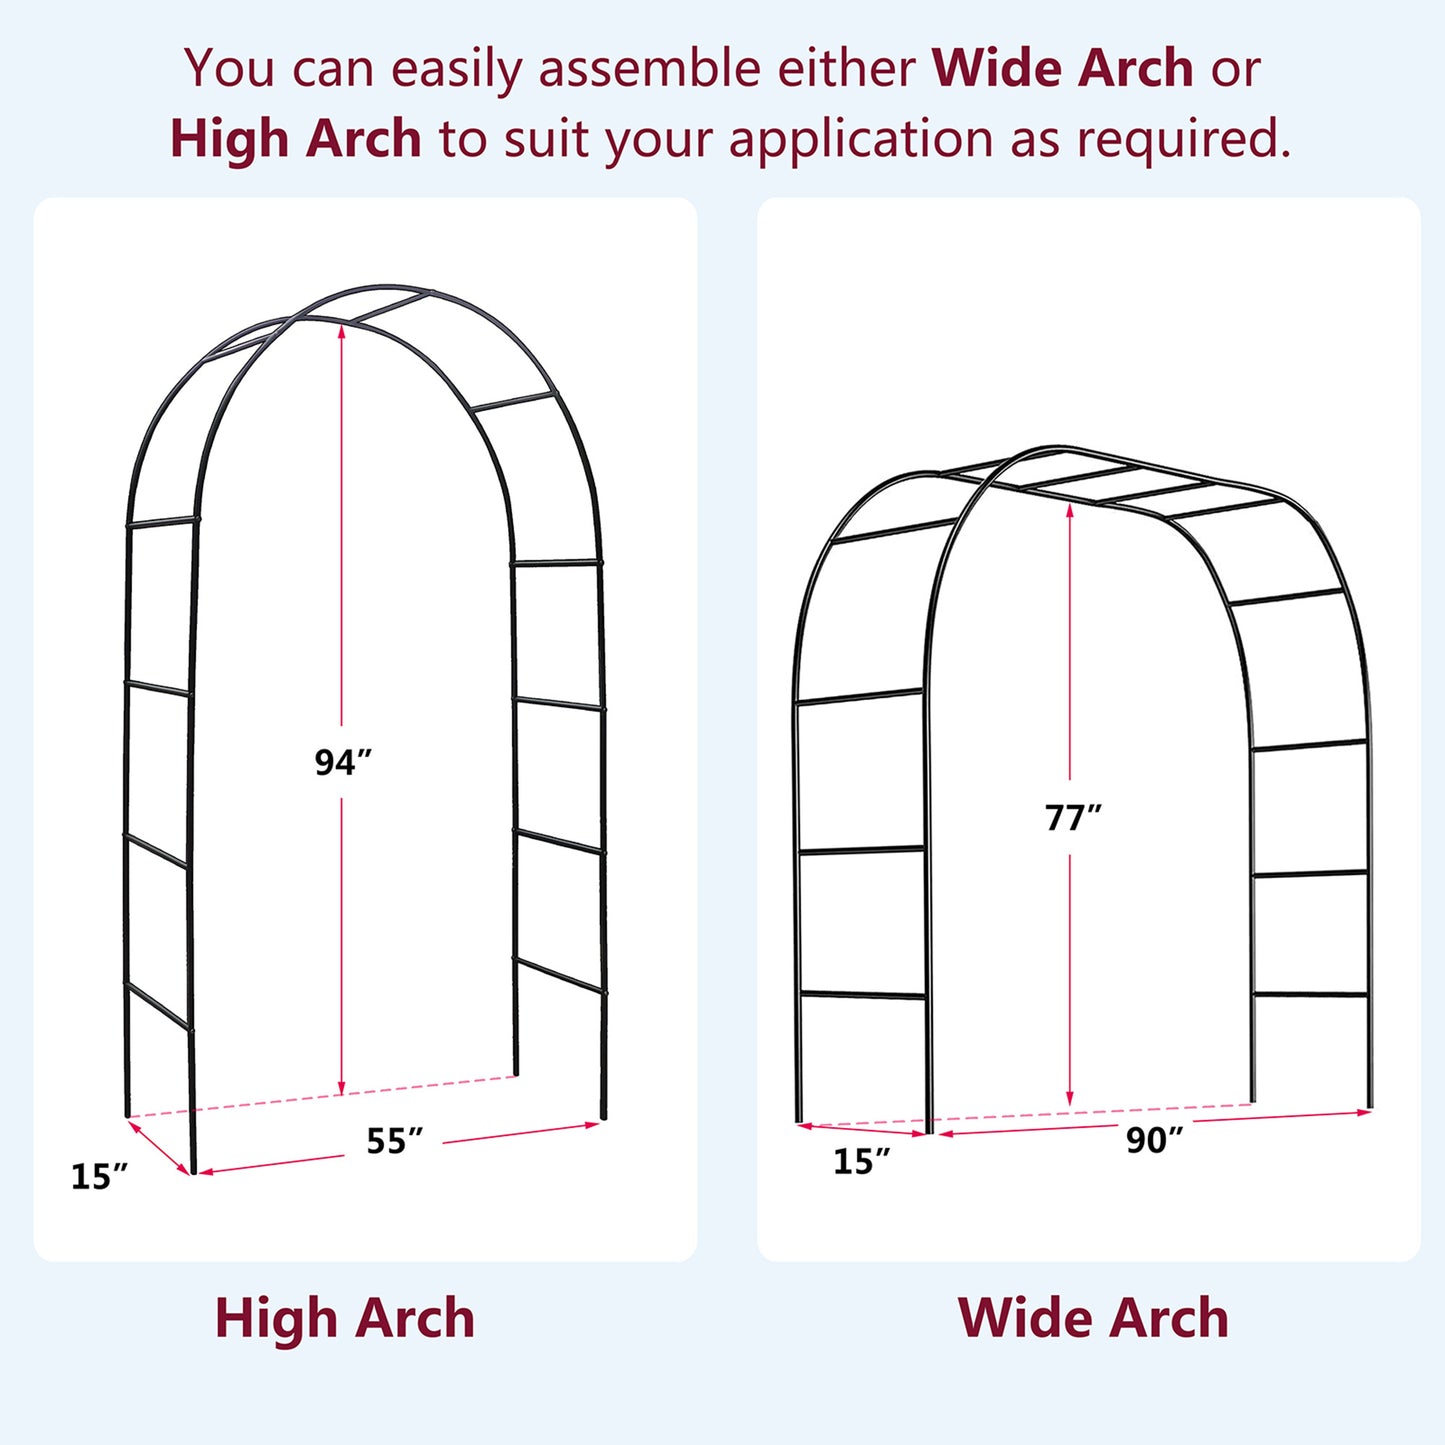 78"H x 45"W Metal Garden Arch Trellis; Adjustable Arbor Trellis for Garden Climbing Plants Support or Wedding Decor